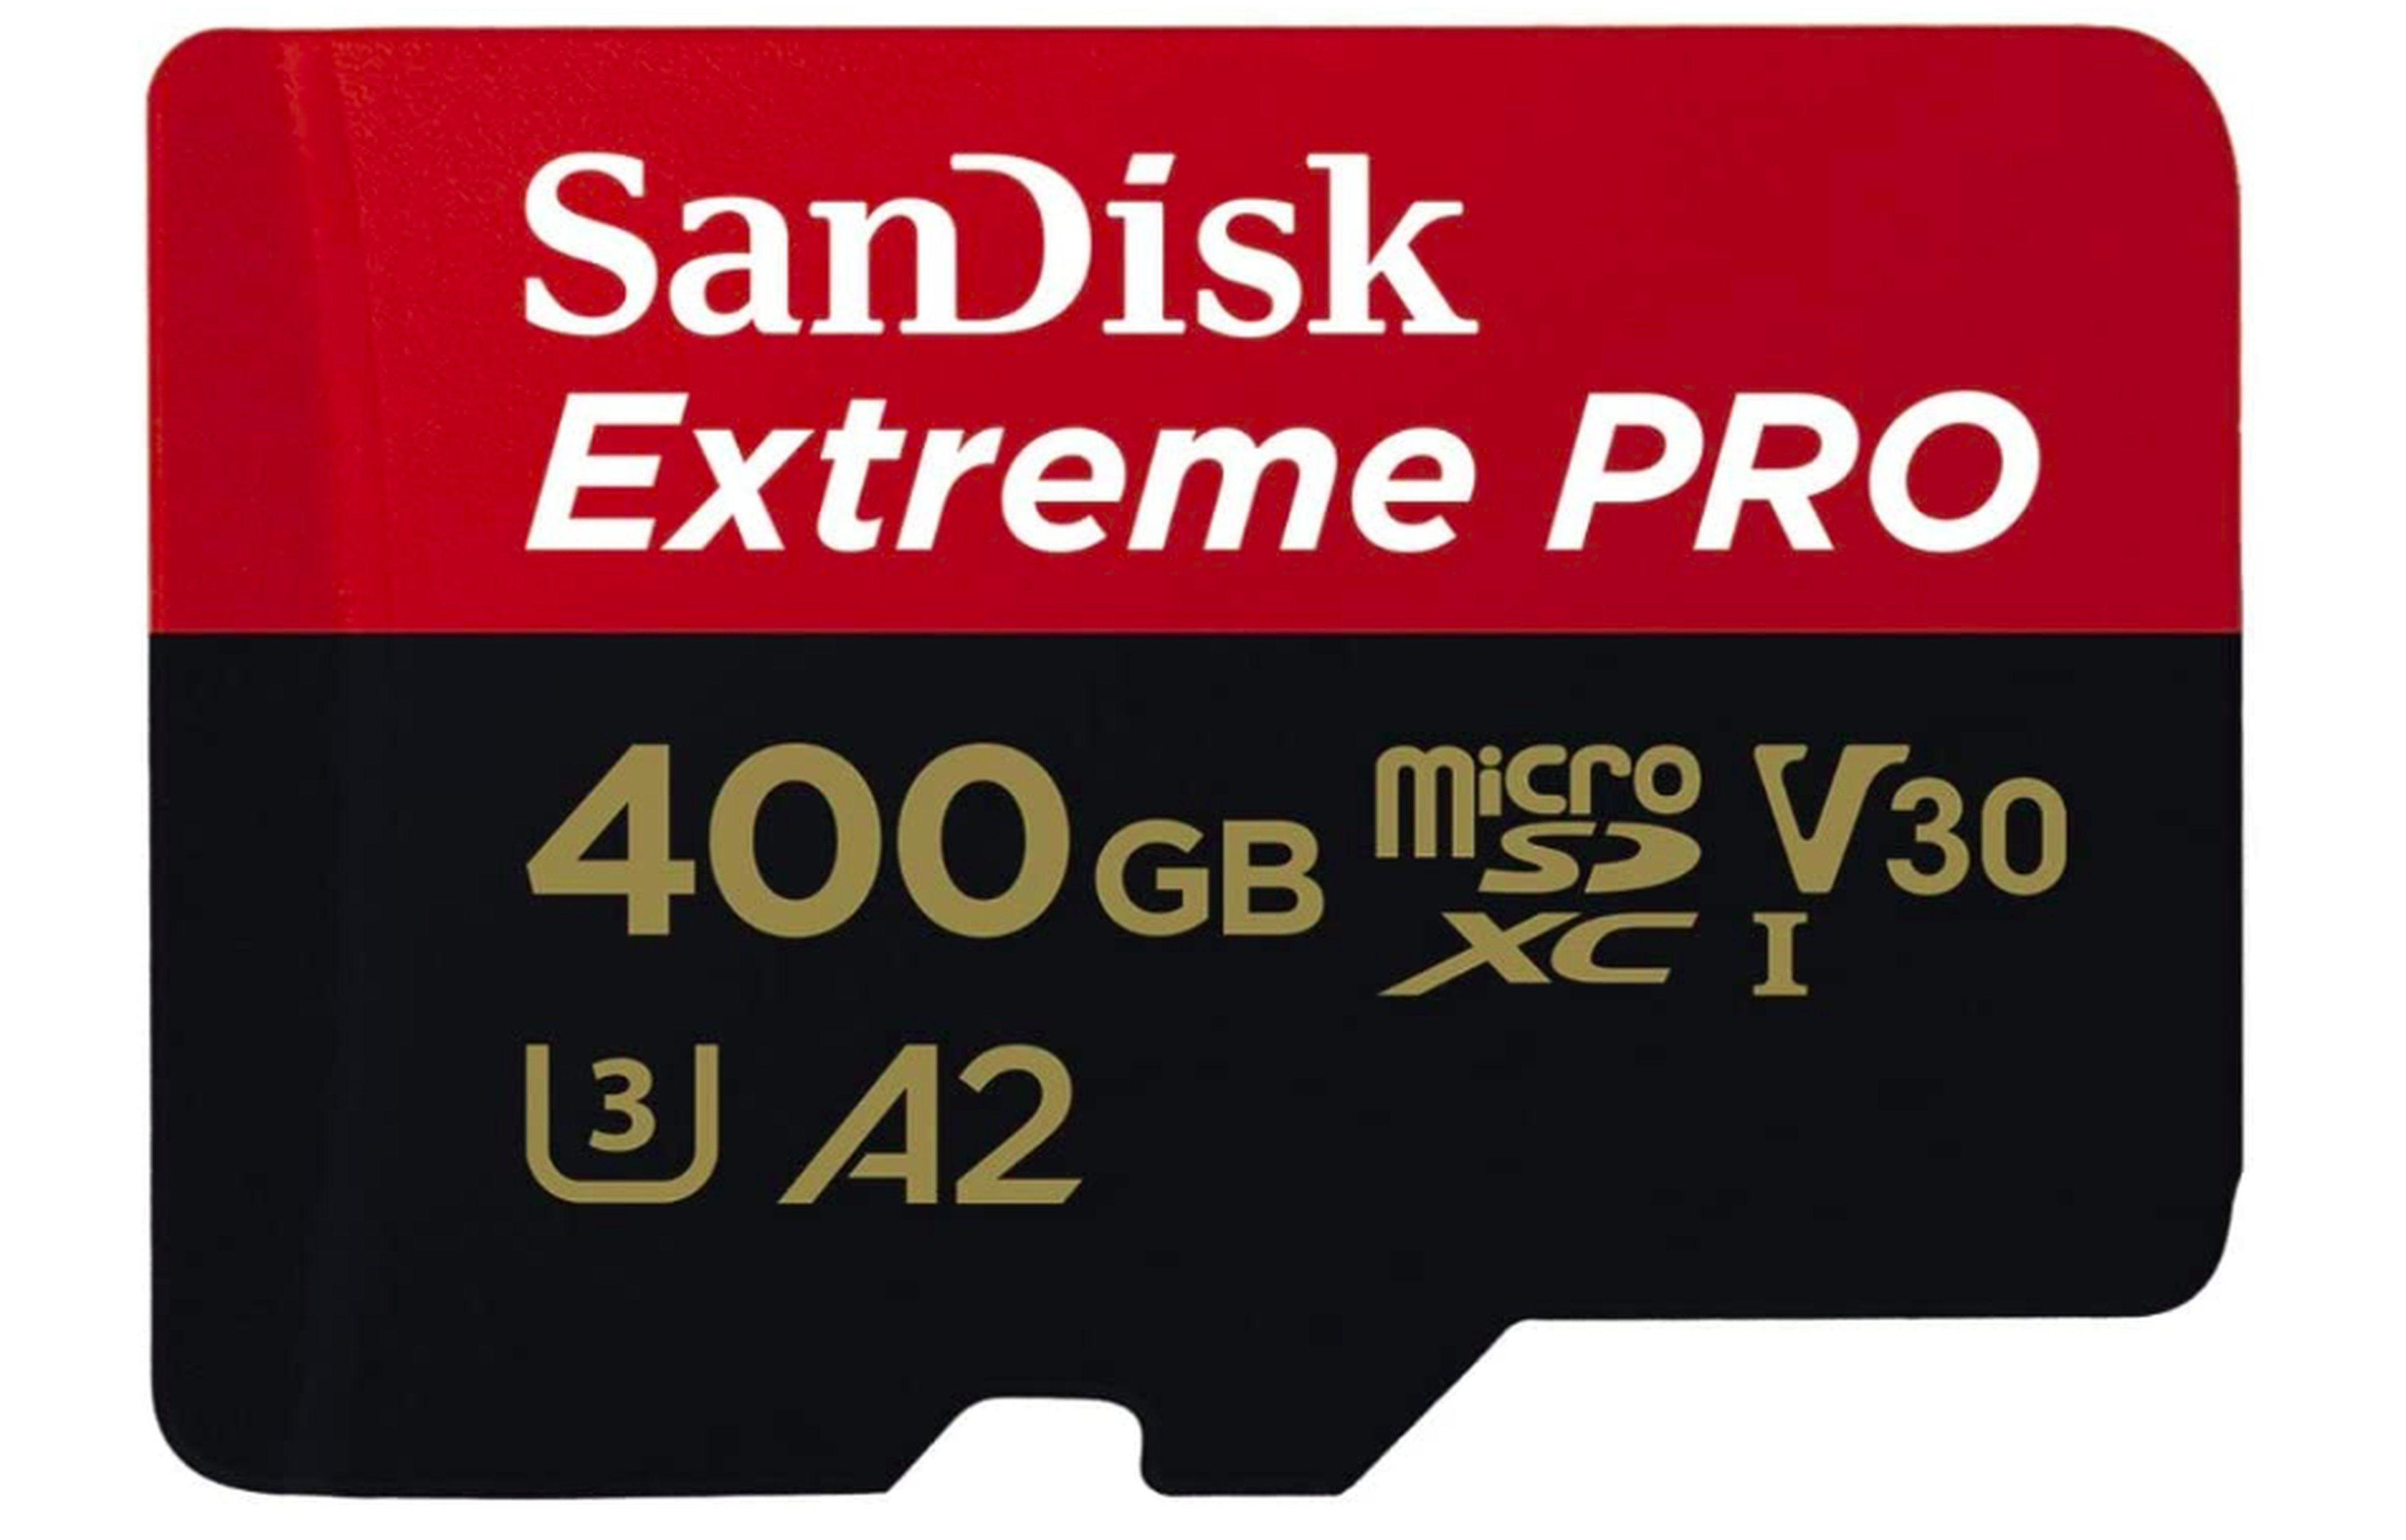 SanDisk Extreme PRO 400 GB.